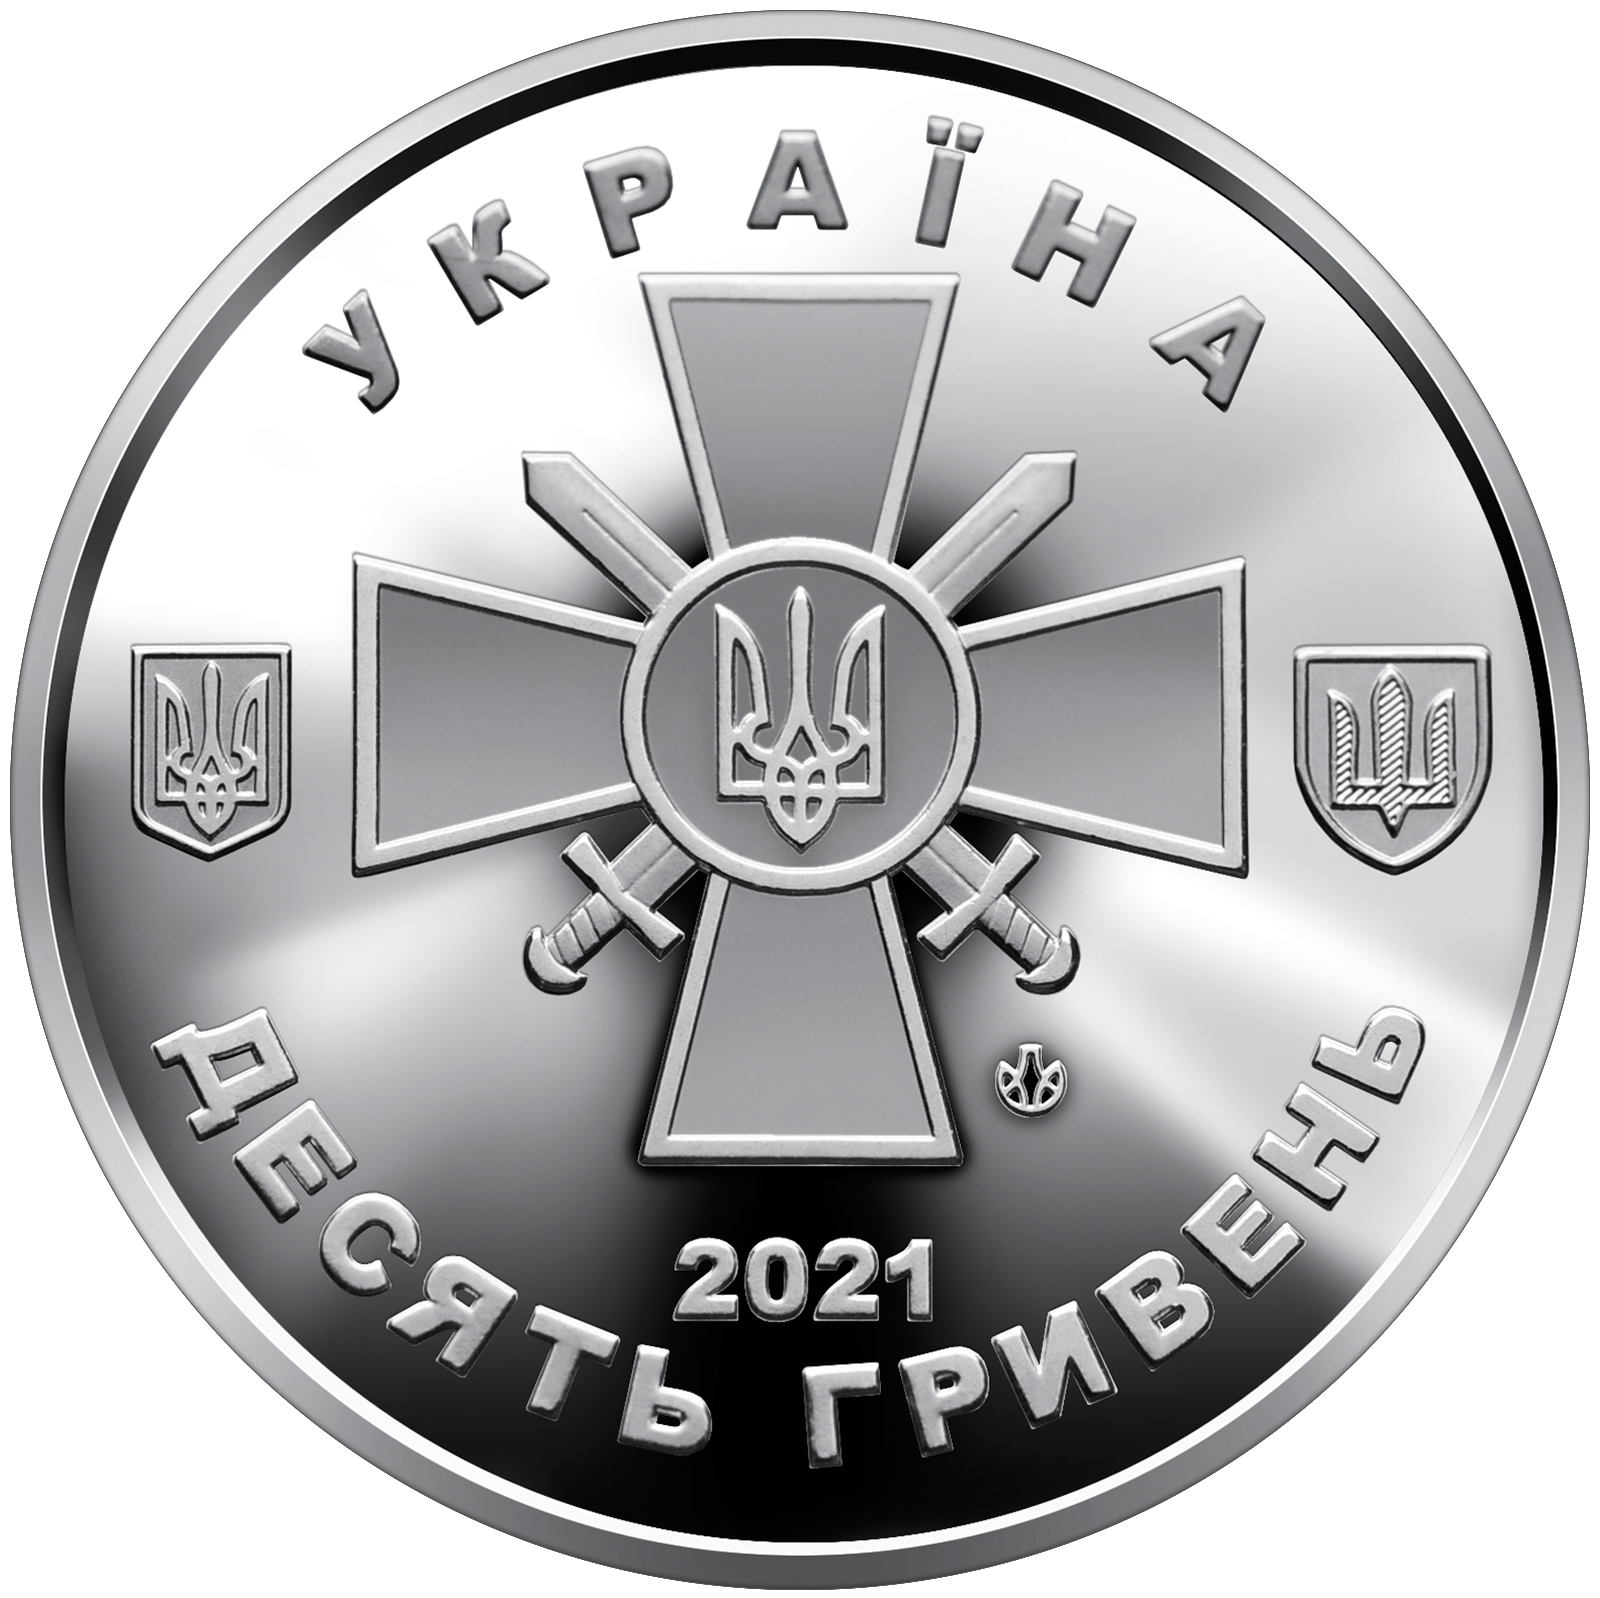 UA 10 Hryvnias 2021 National Bank of Ukraine logo